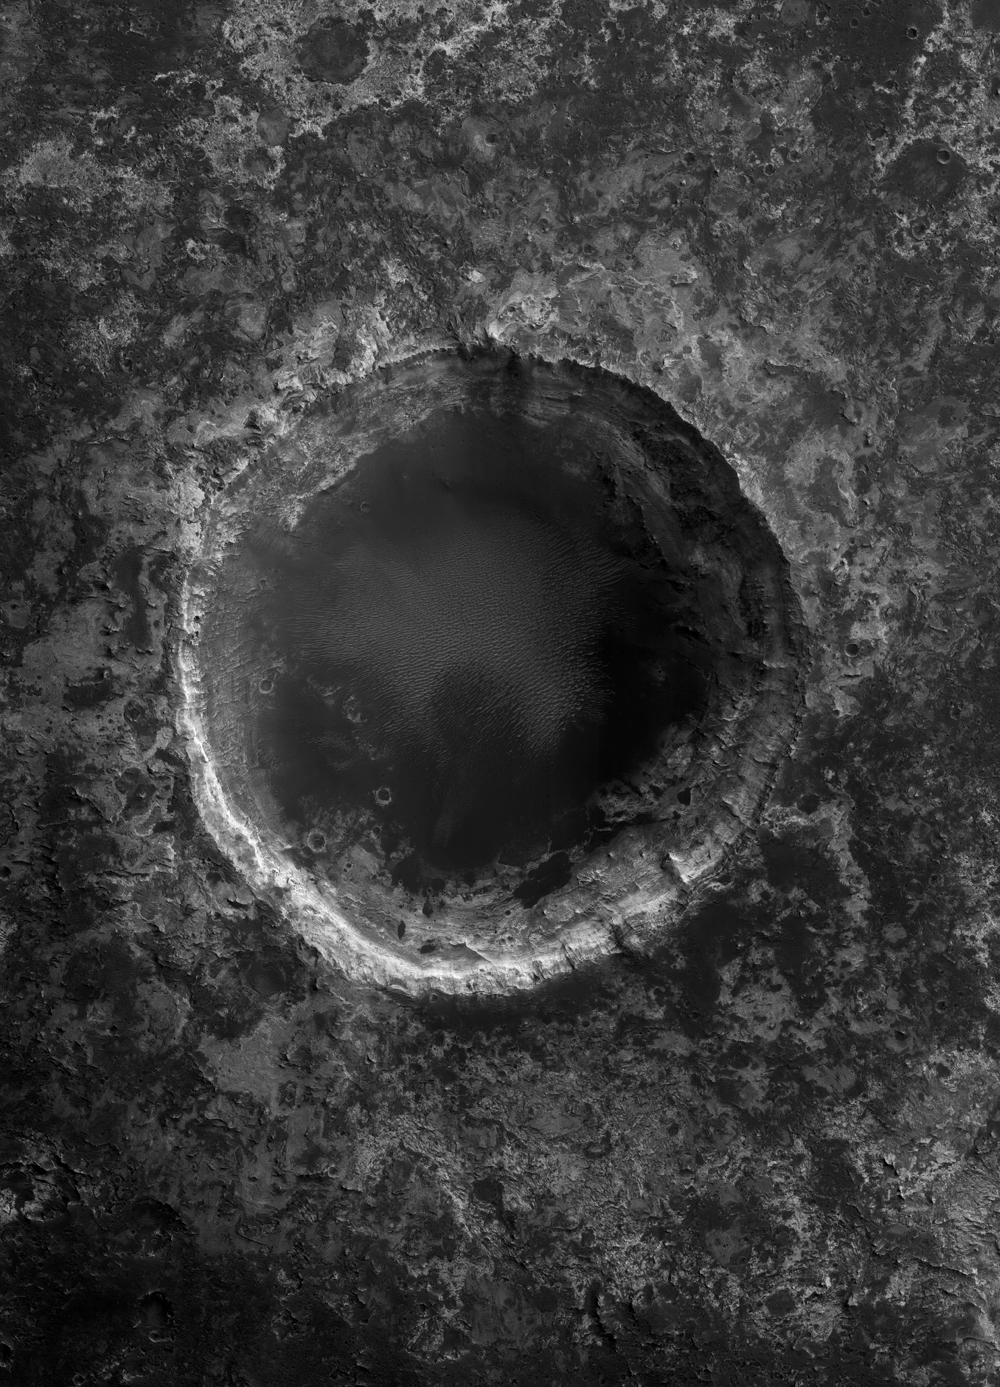 8 Incredible Images That Make Mars Look Like A Petri Dish